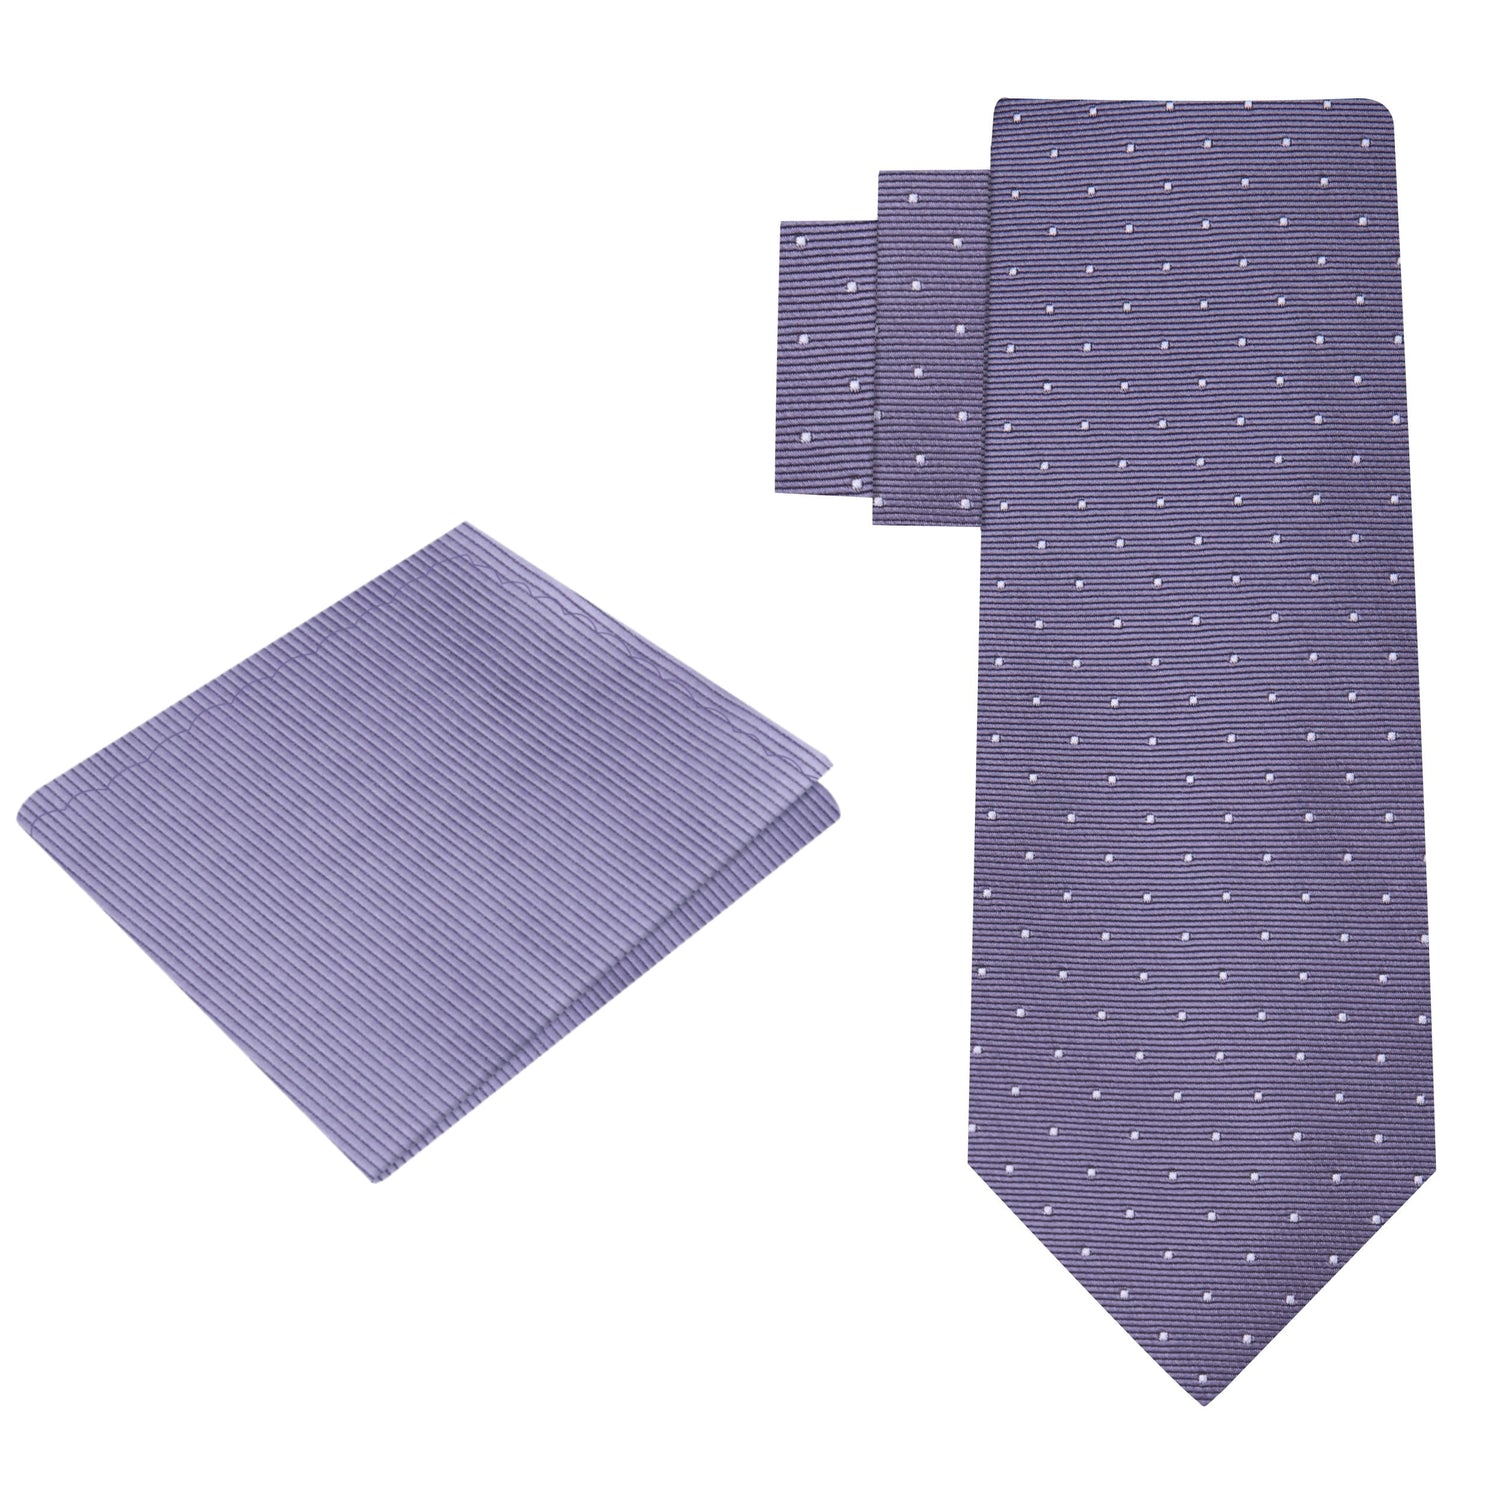 View 3: Grey, White Polka necktie and Square